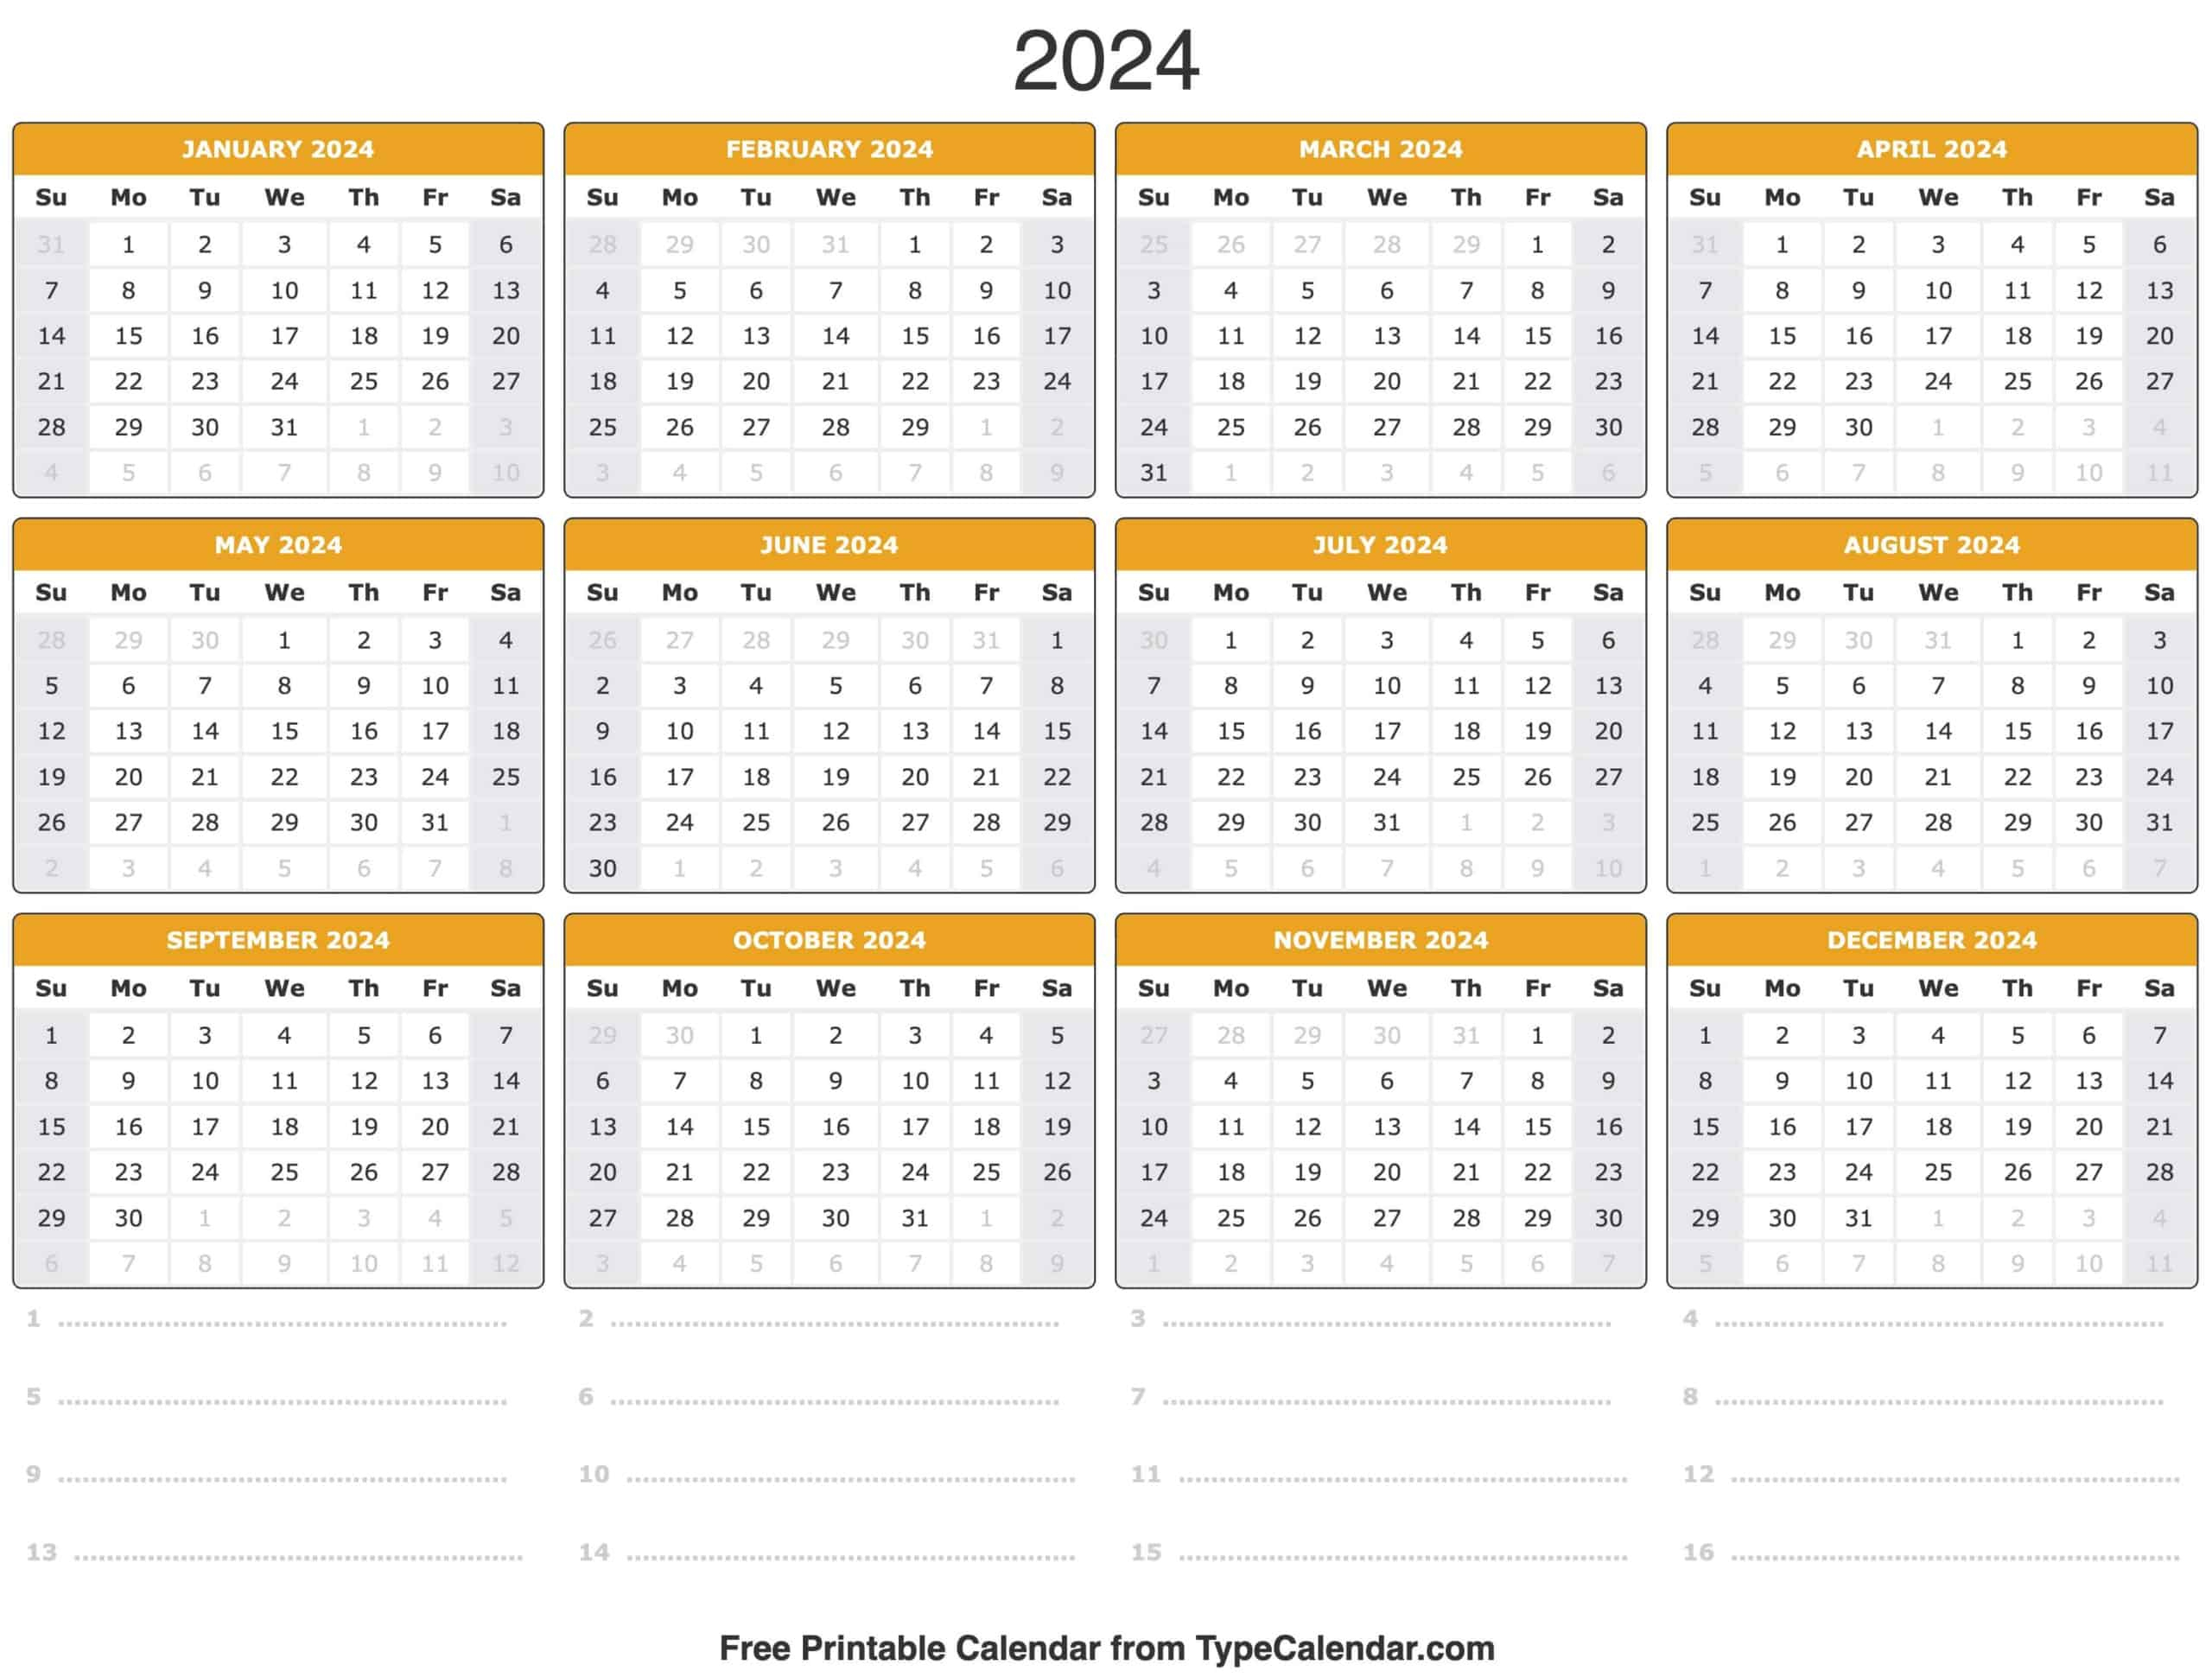 2024 Calendar: Free Printable Calendar With Holidays | Free Printable Calendar 2024 Large Print